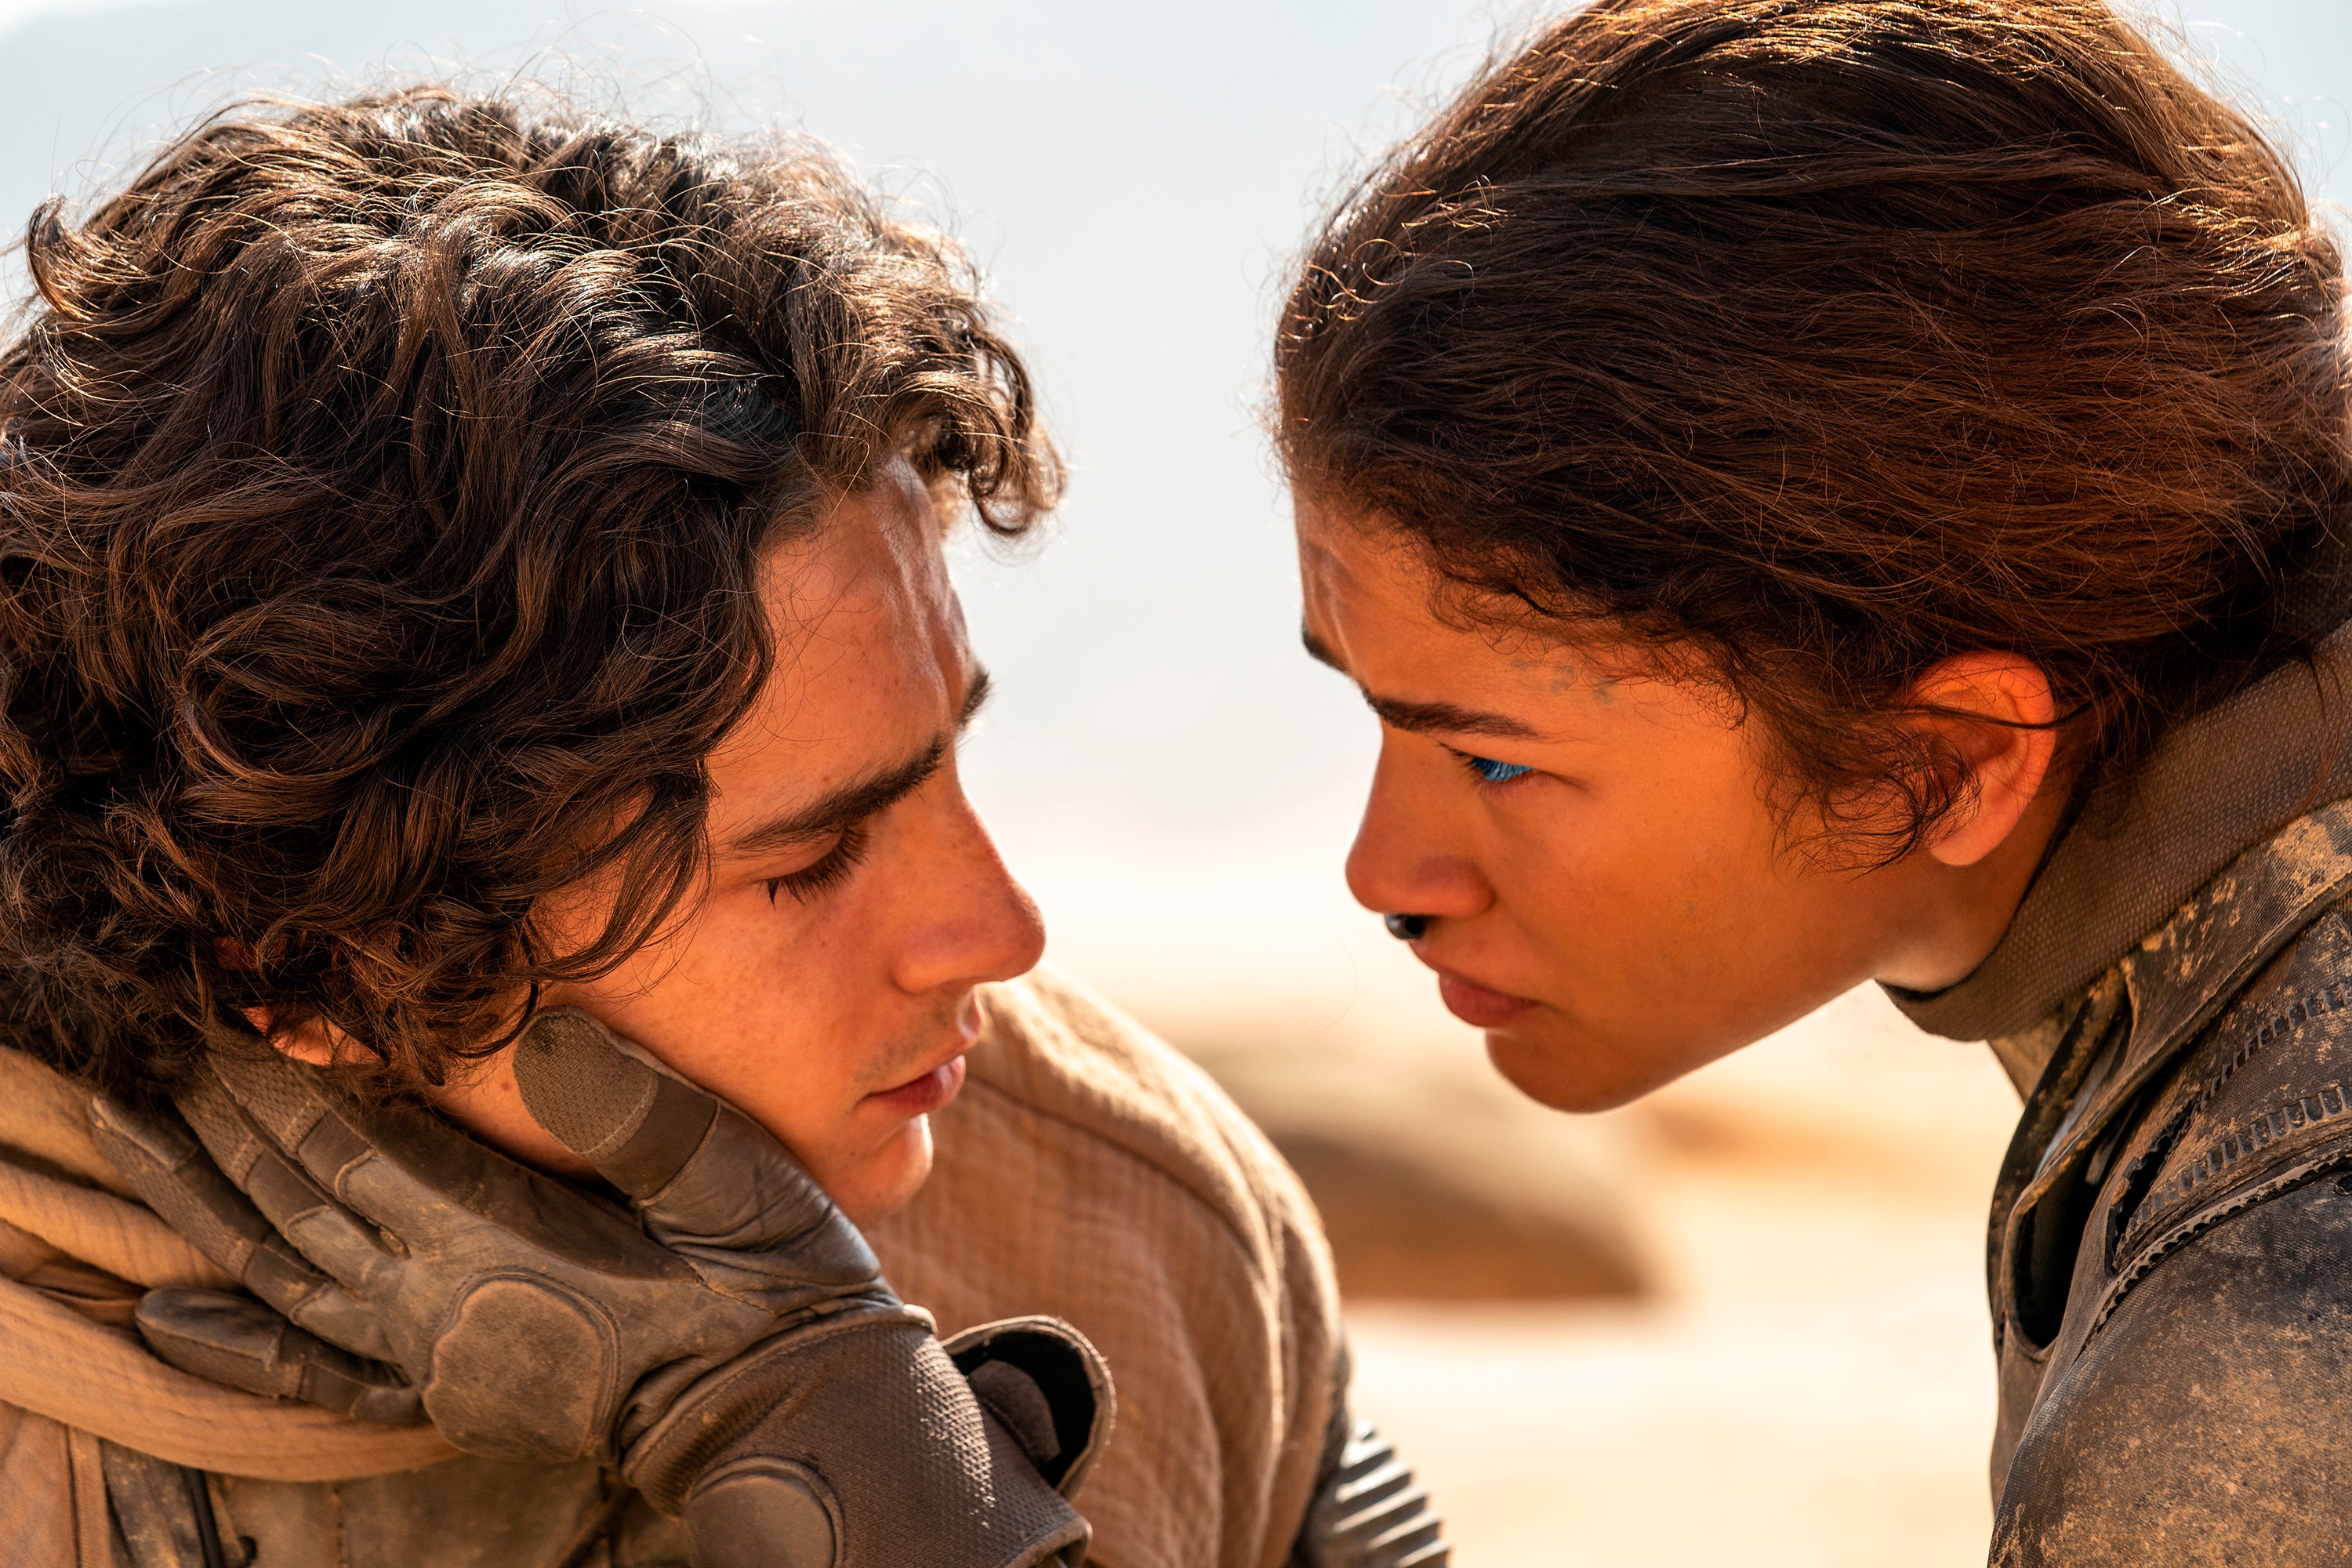 ‘Dune’ is coming to Netflix US